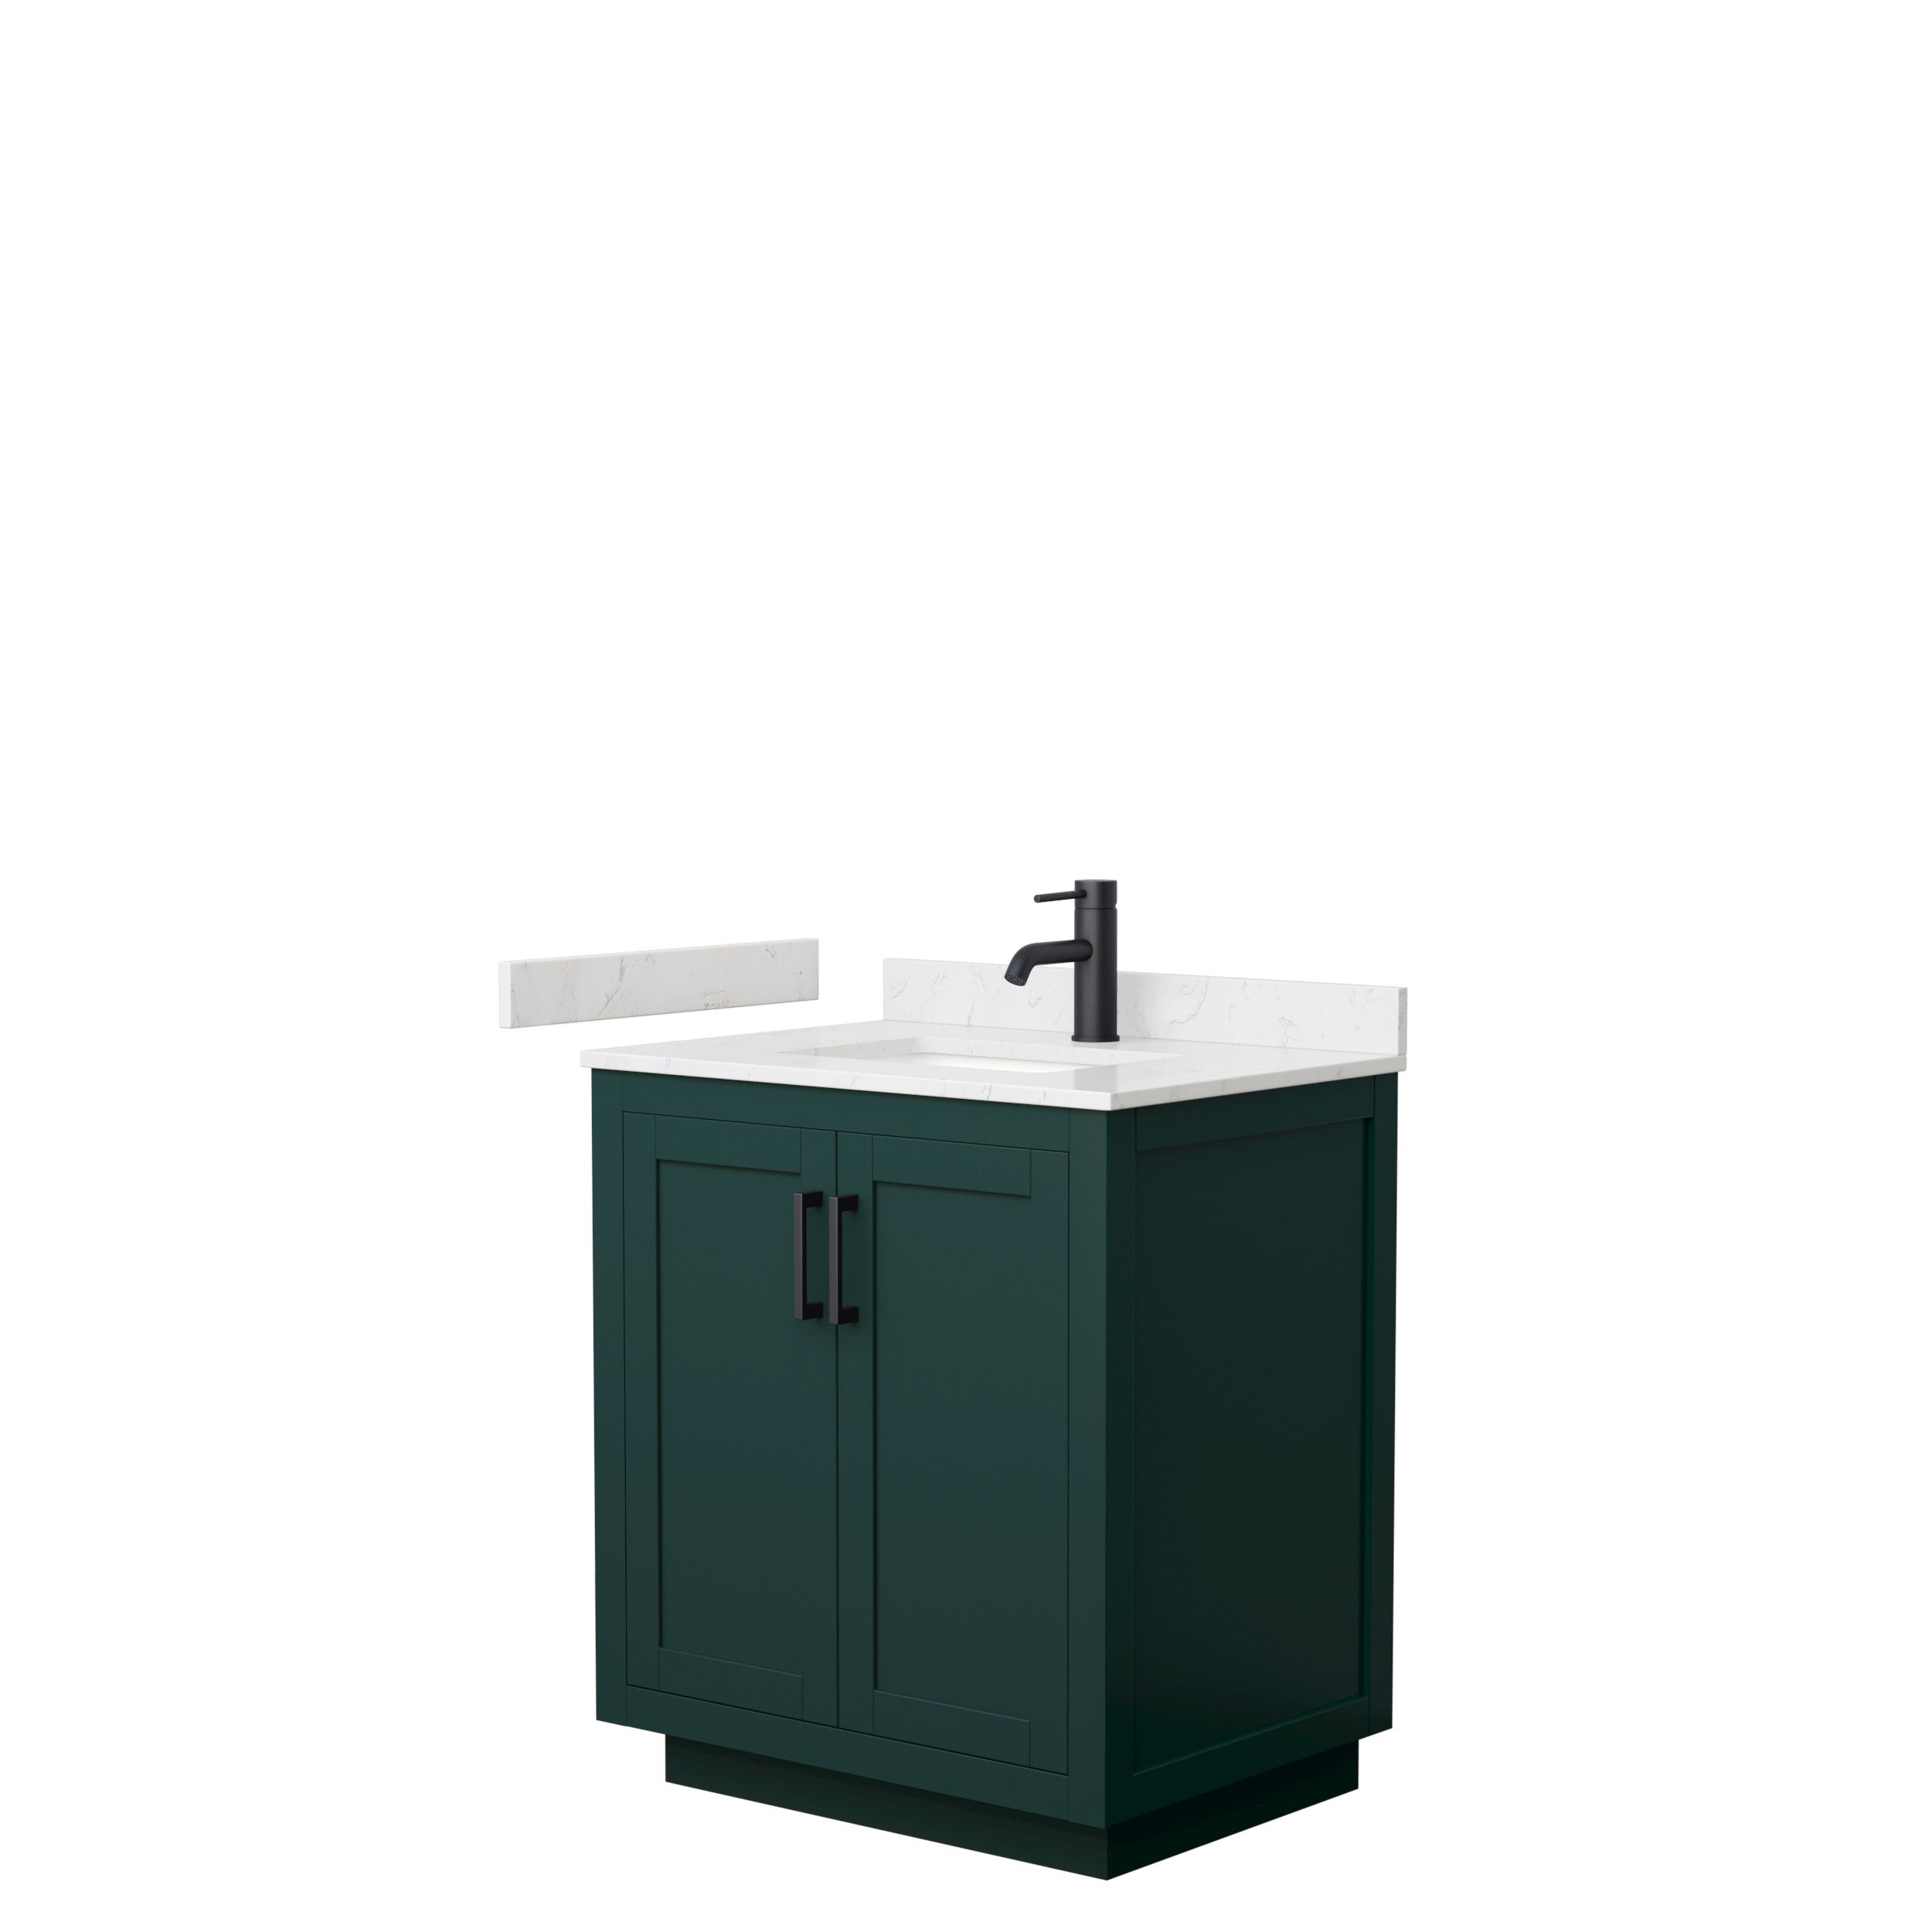 30" Single Bathroom Vanity in Green, Light-Vein Carrara Cultured Marble Countertop, Undermount Square Sink, Matte Black Trim